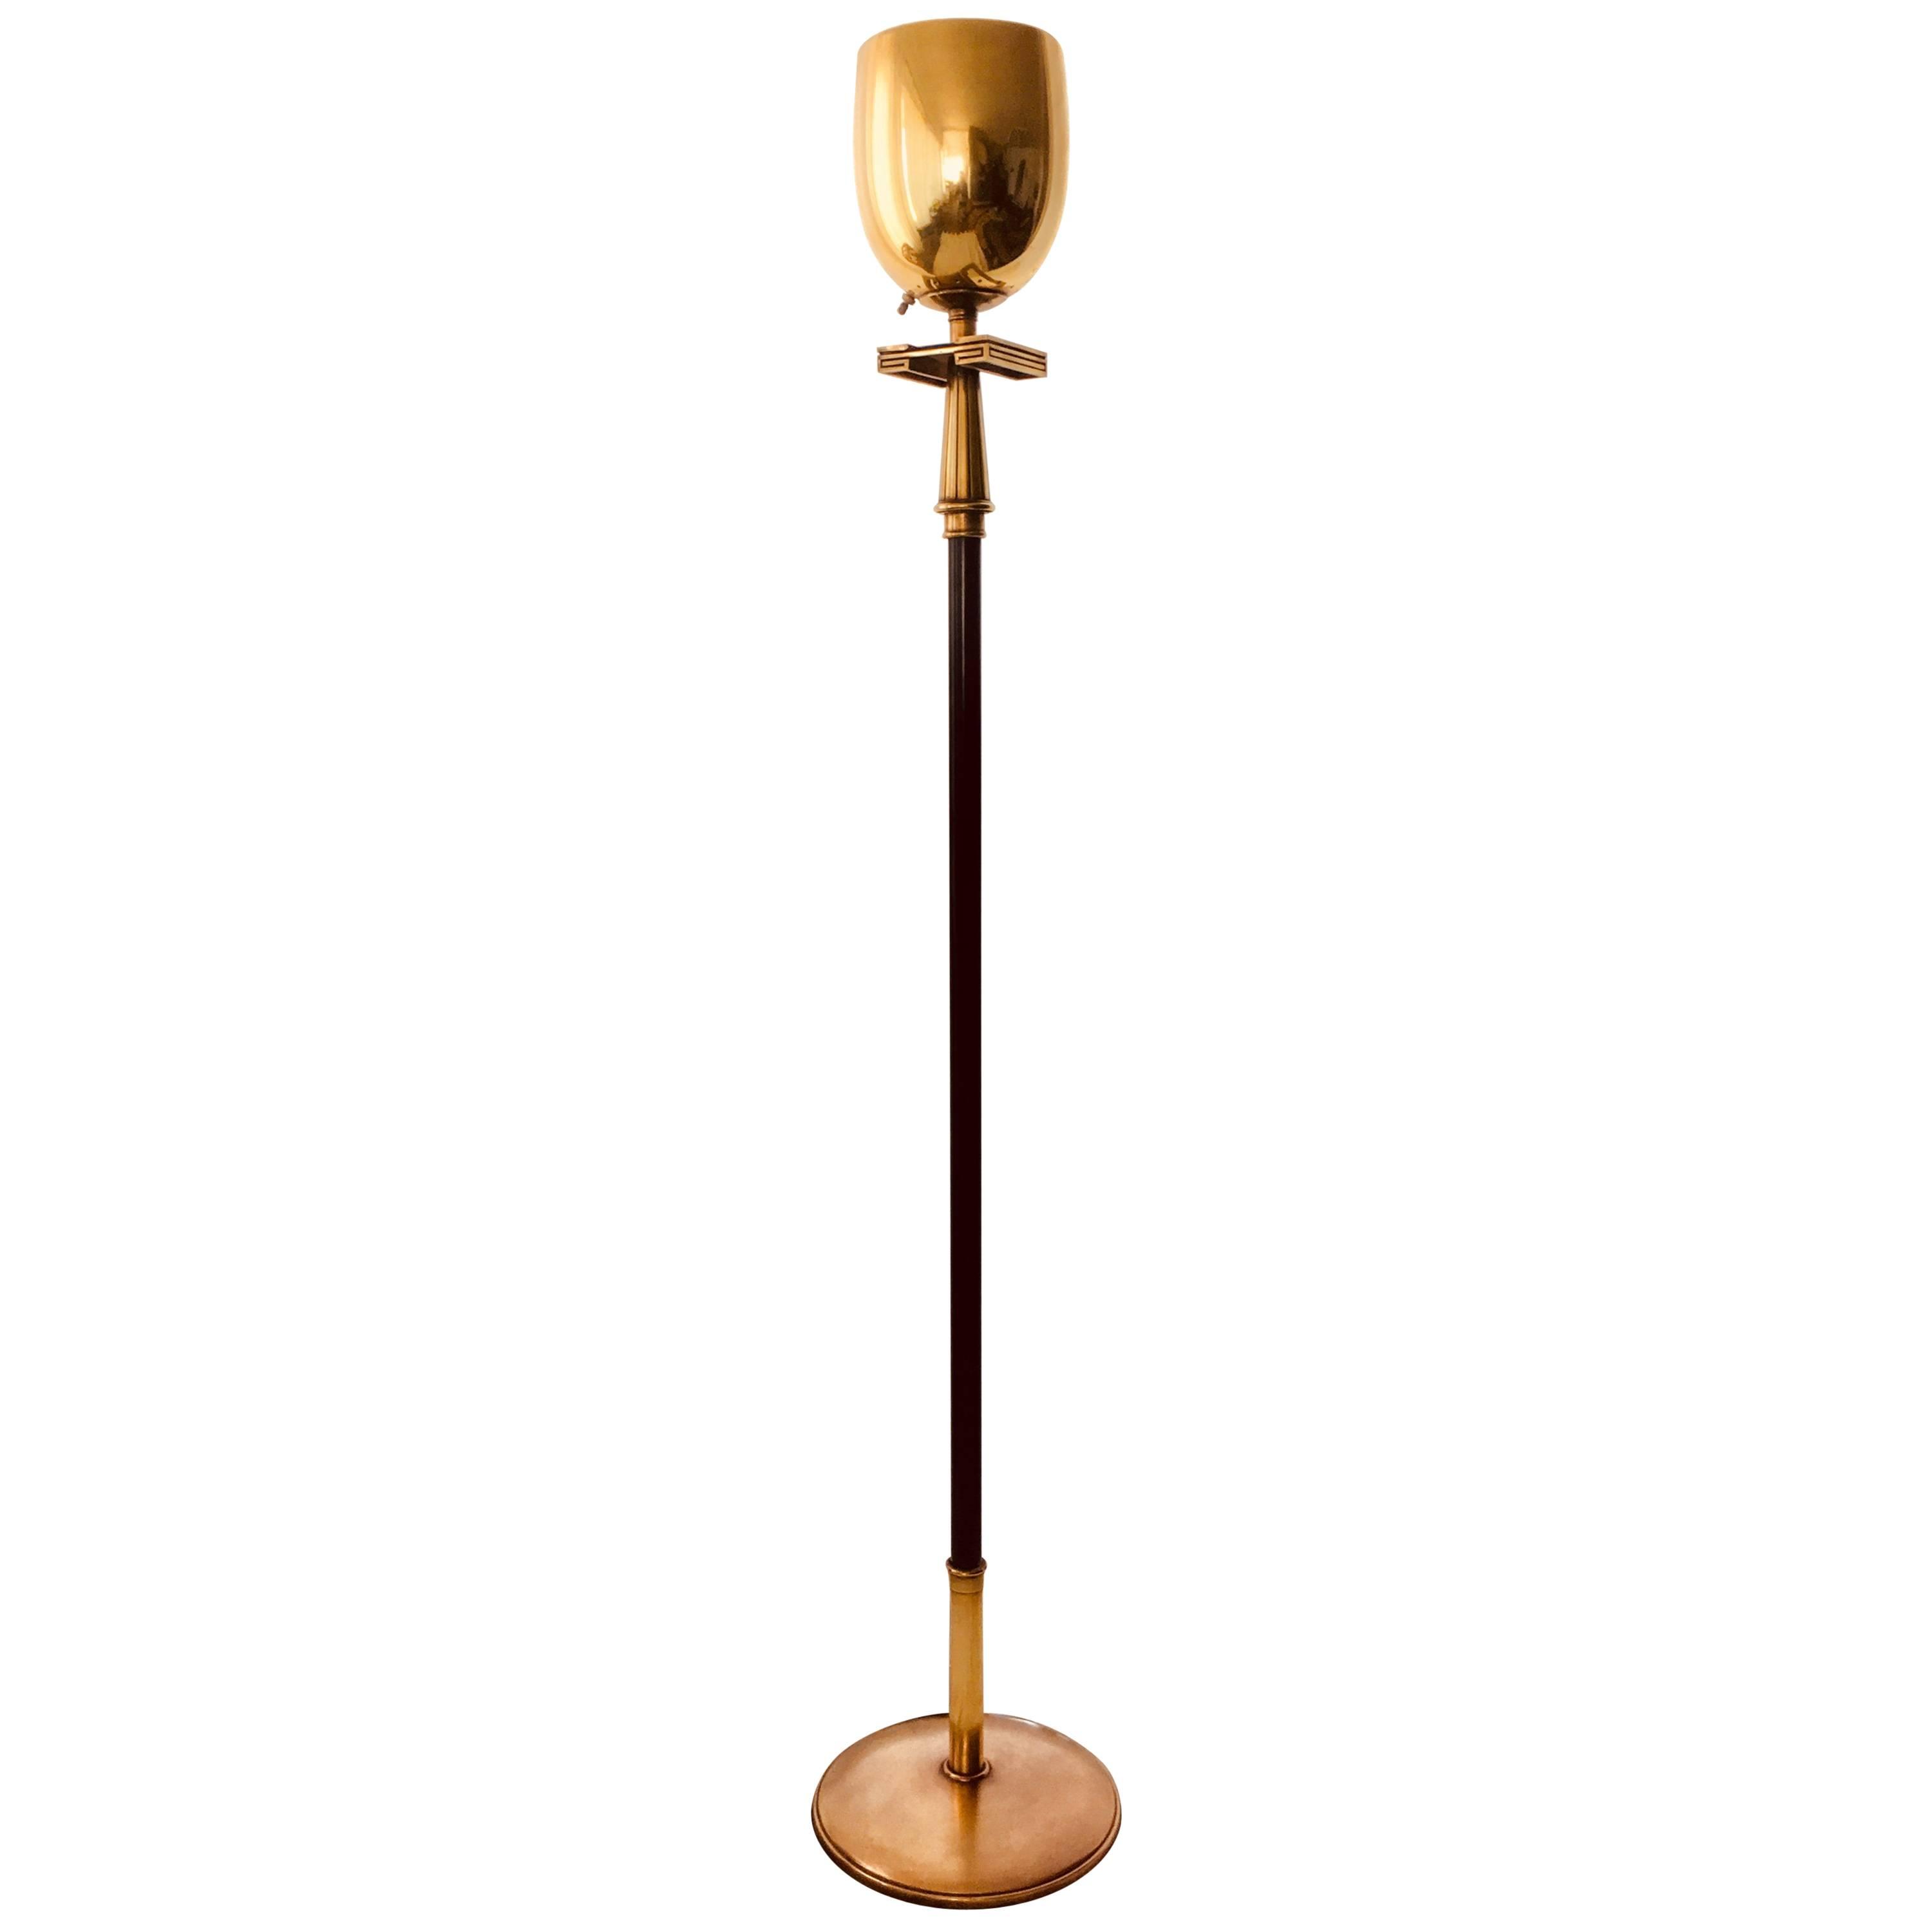 Stiffel Brass Torchere Floor Lamp with Greek Key Design, 1940s For Sale